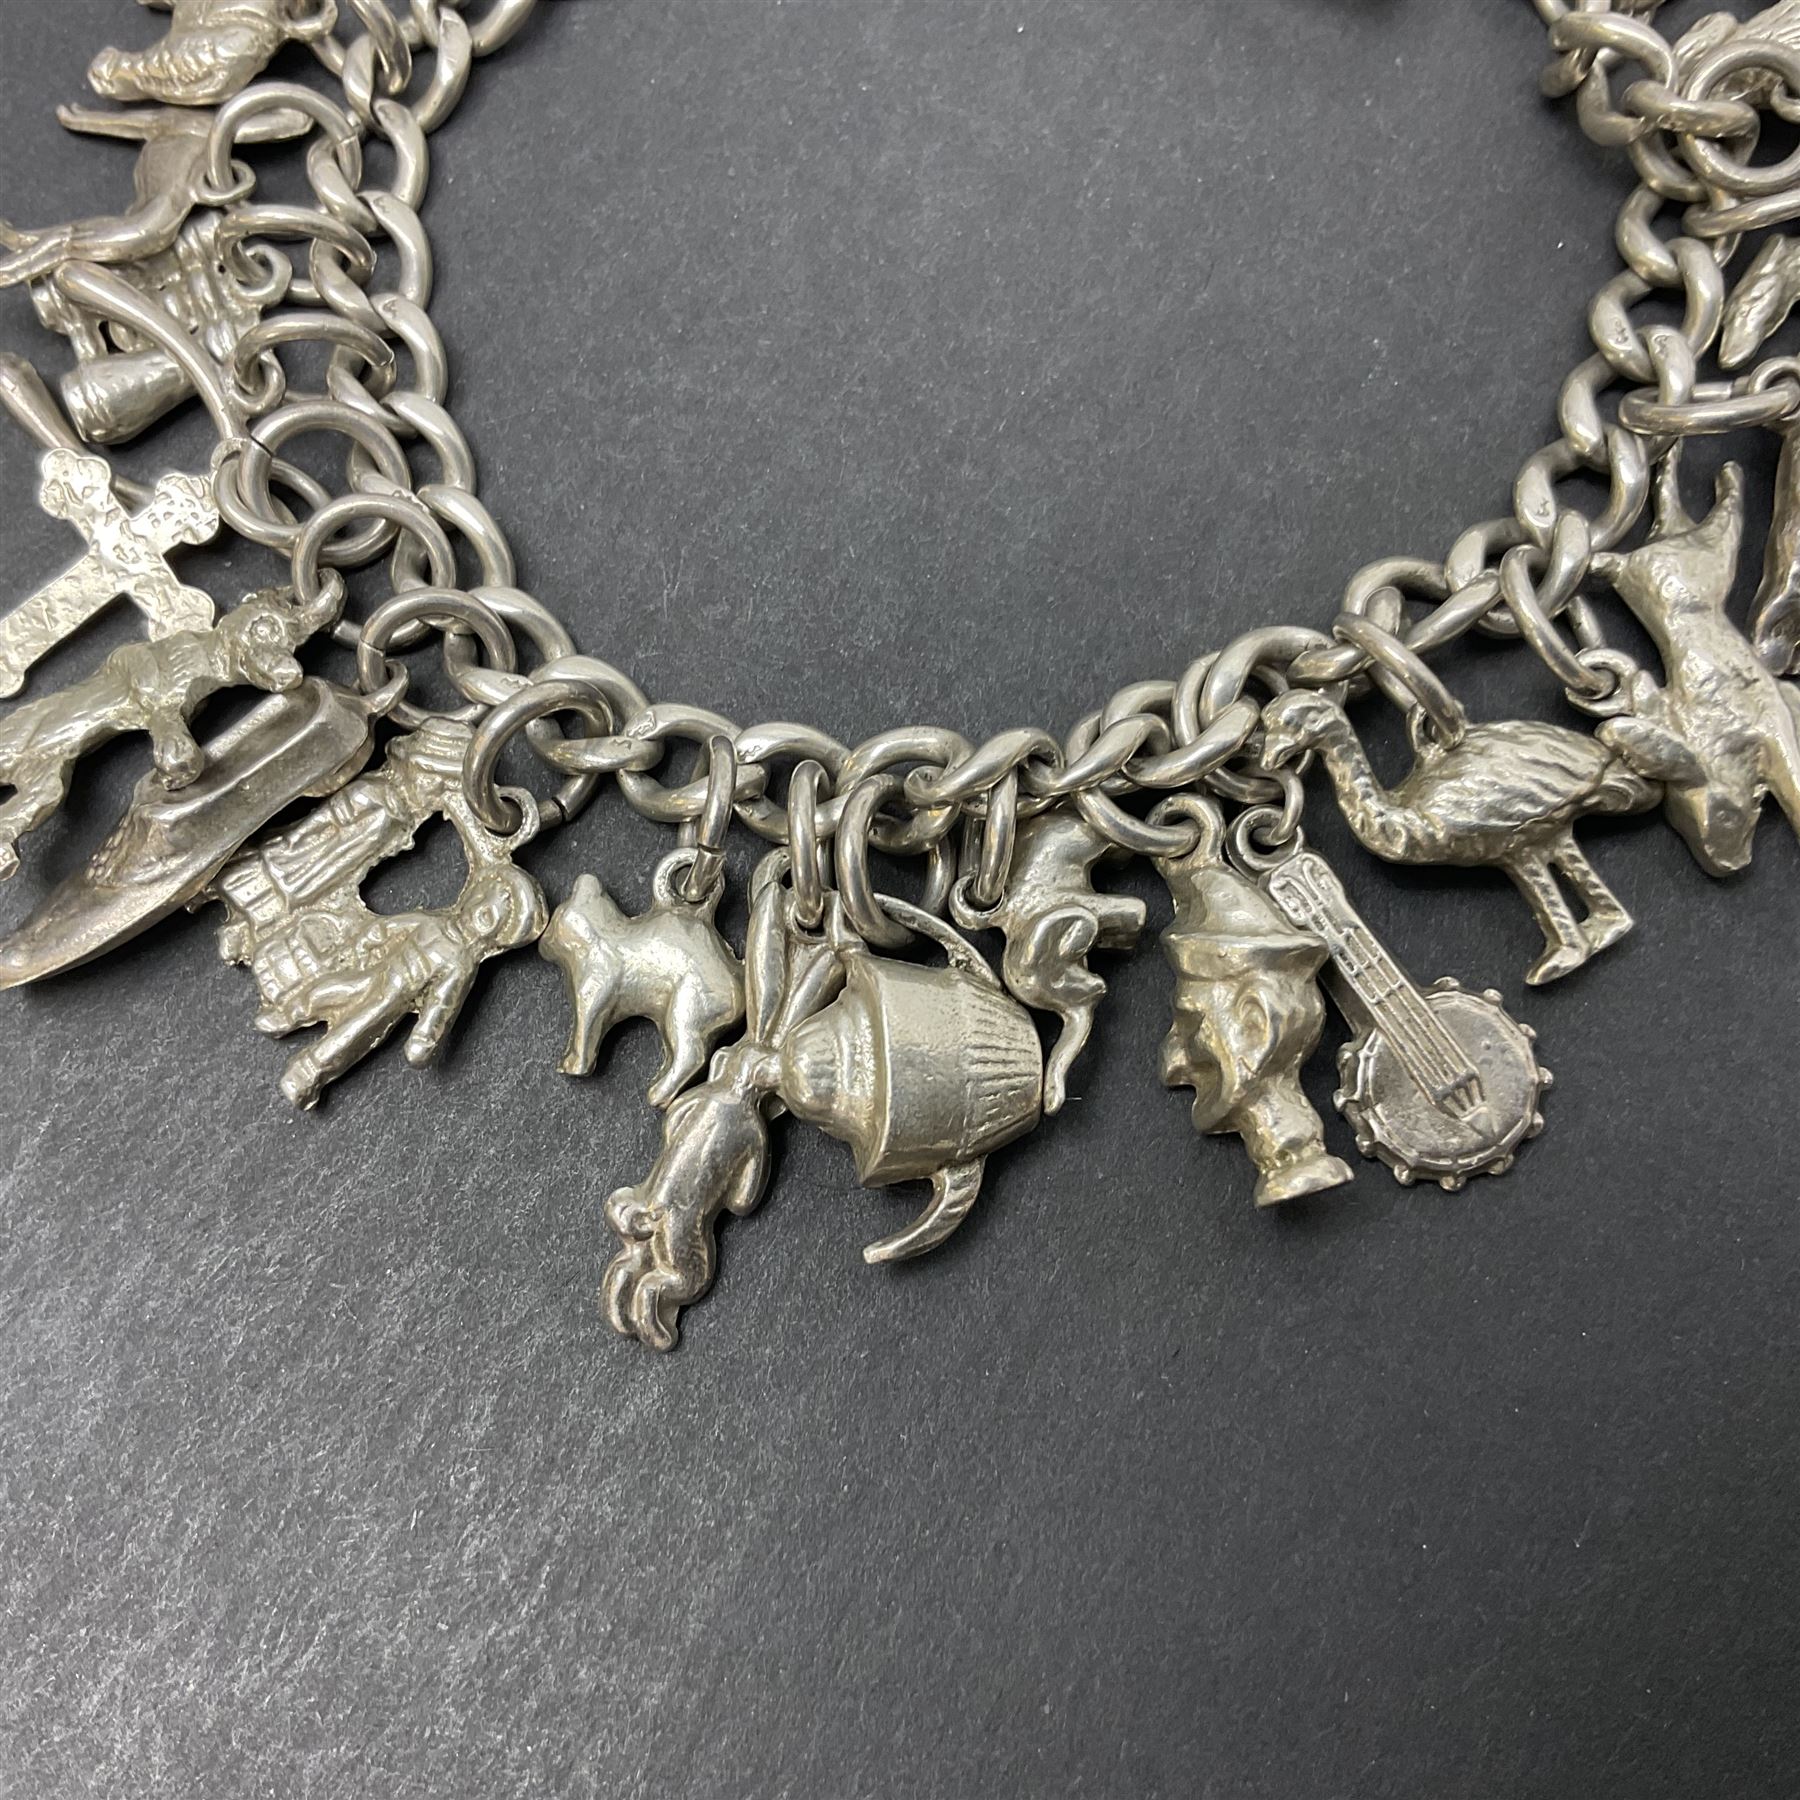 Silver charm bracelet - Image 4 of 6